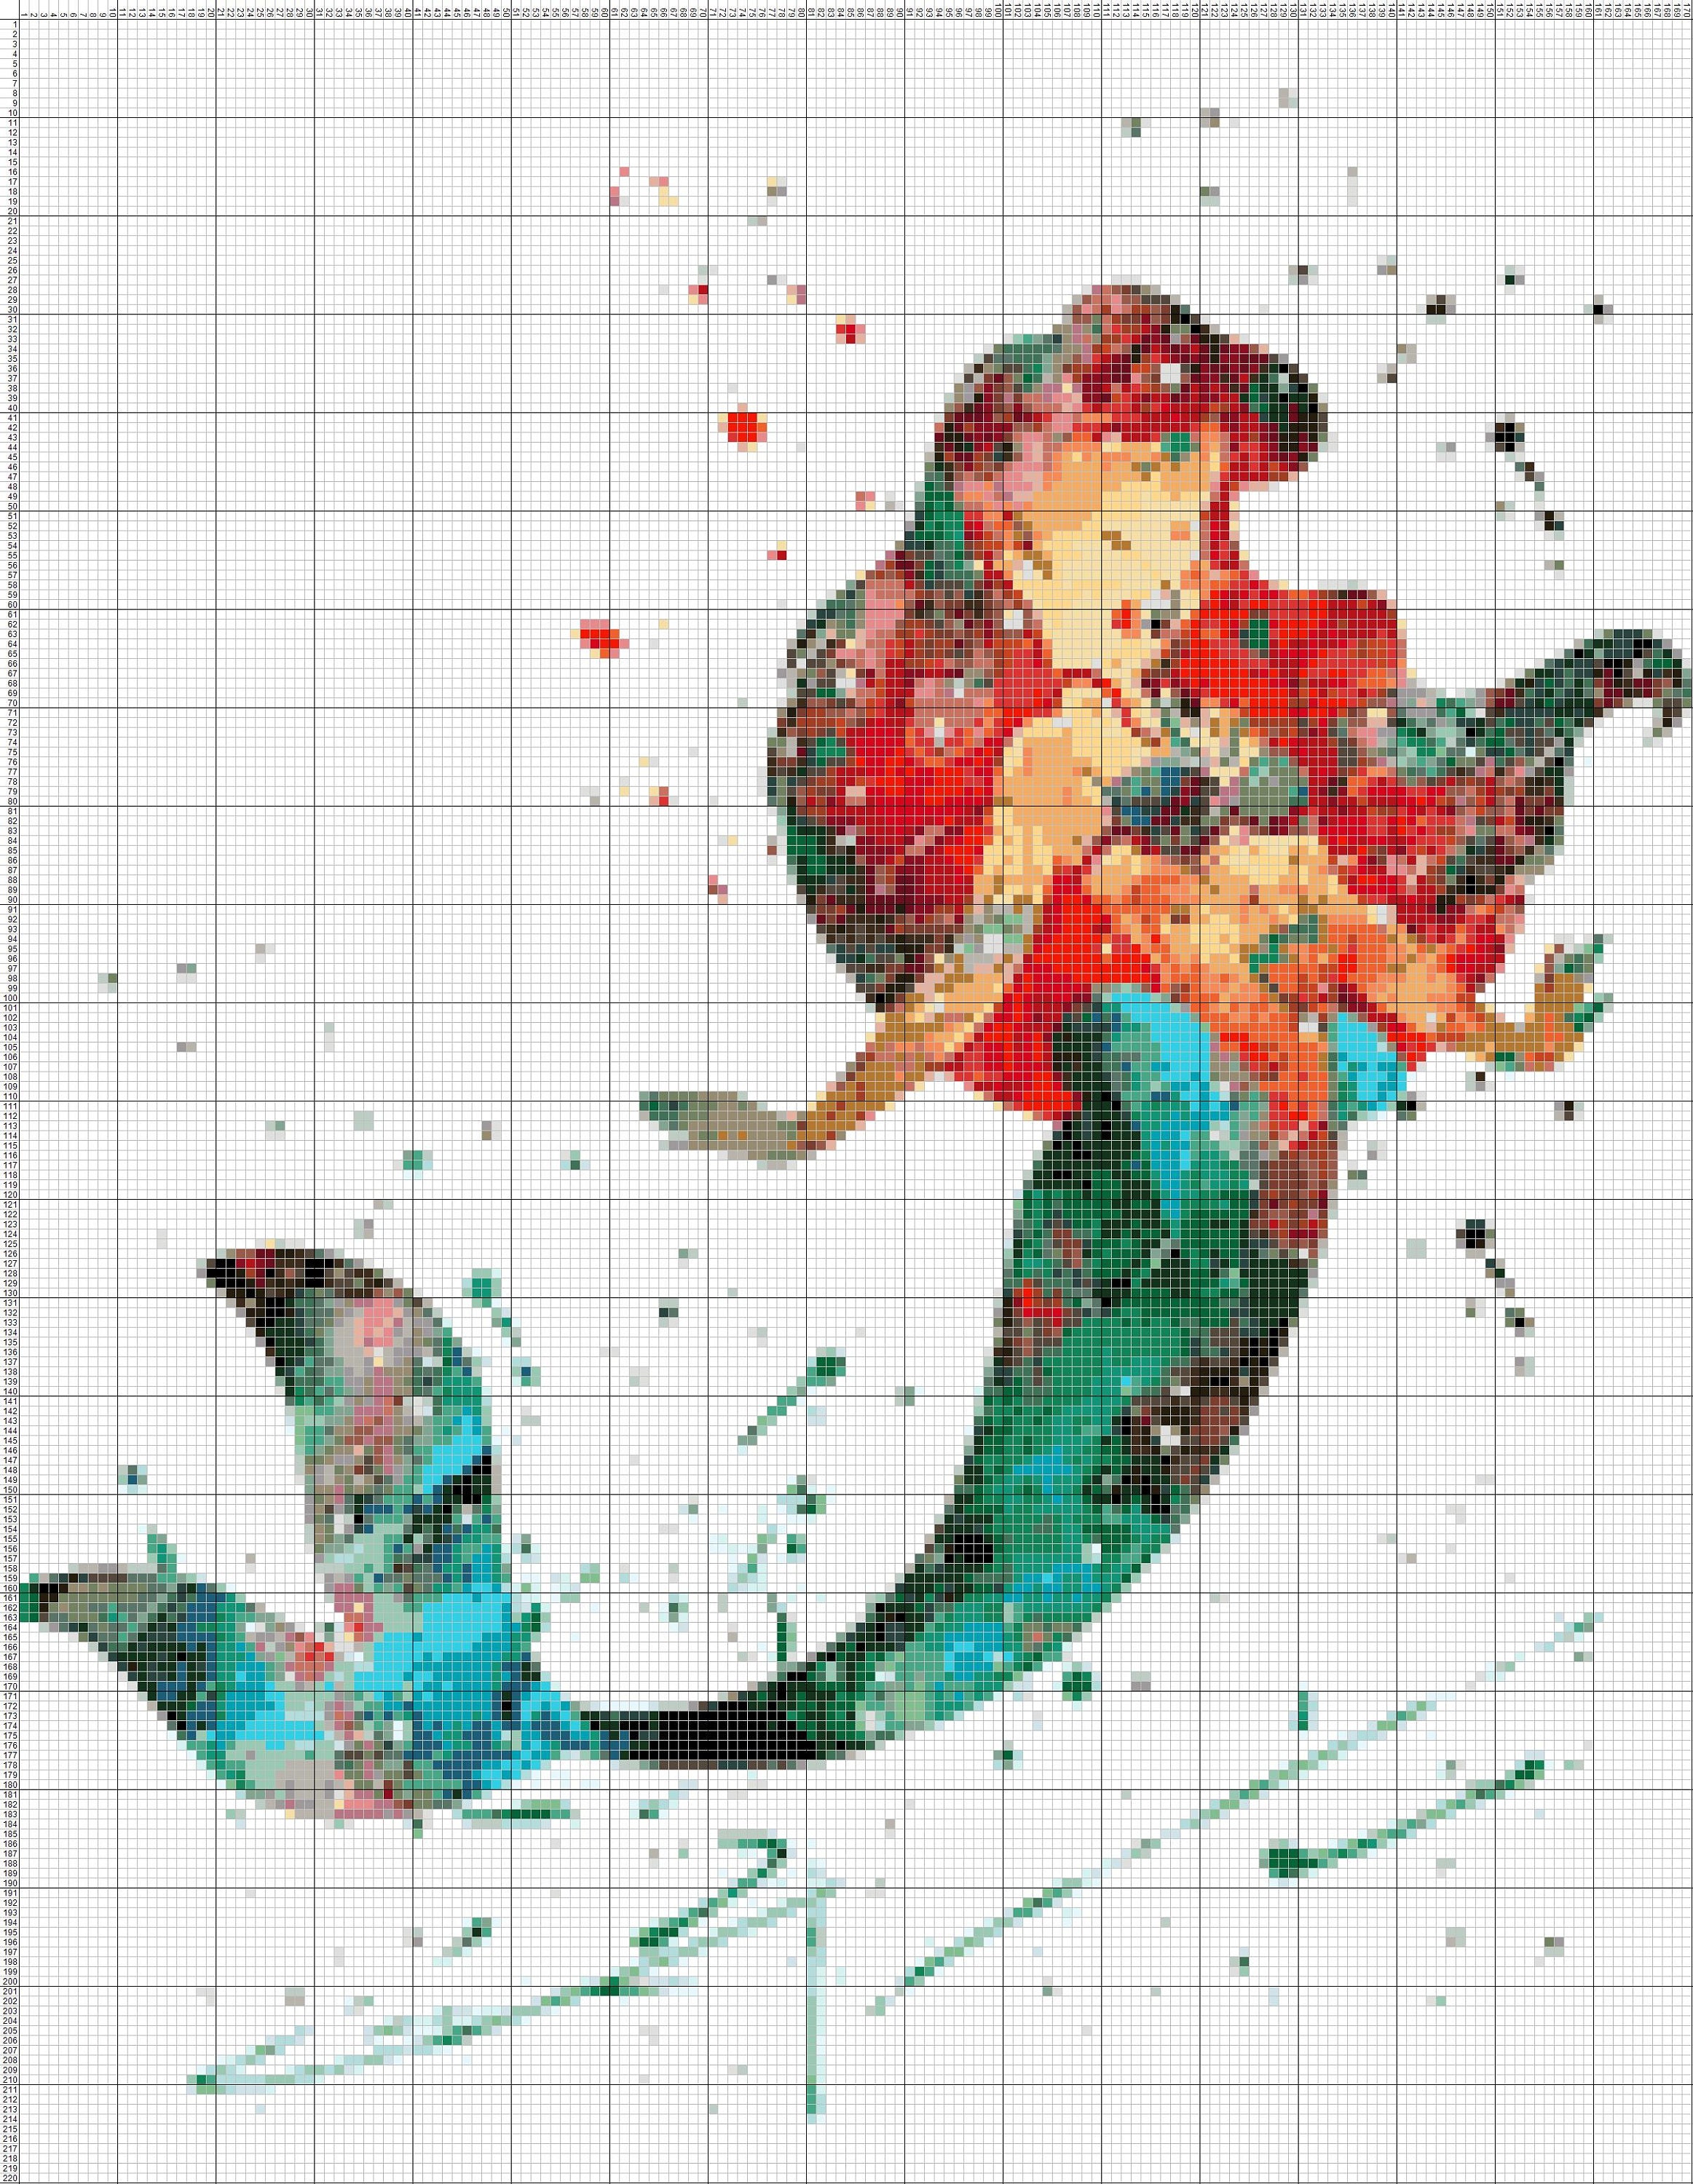 Dimensions Make a Splash Little Mermaid - Disney Cross Stitch Kit 70-65174  - 123Stitch